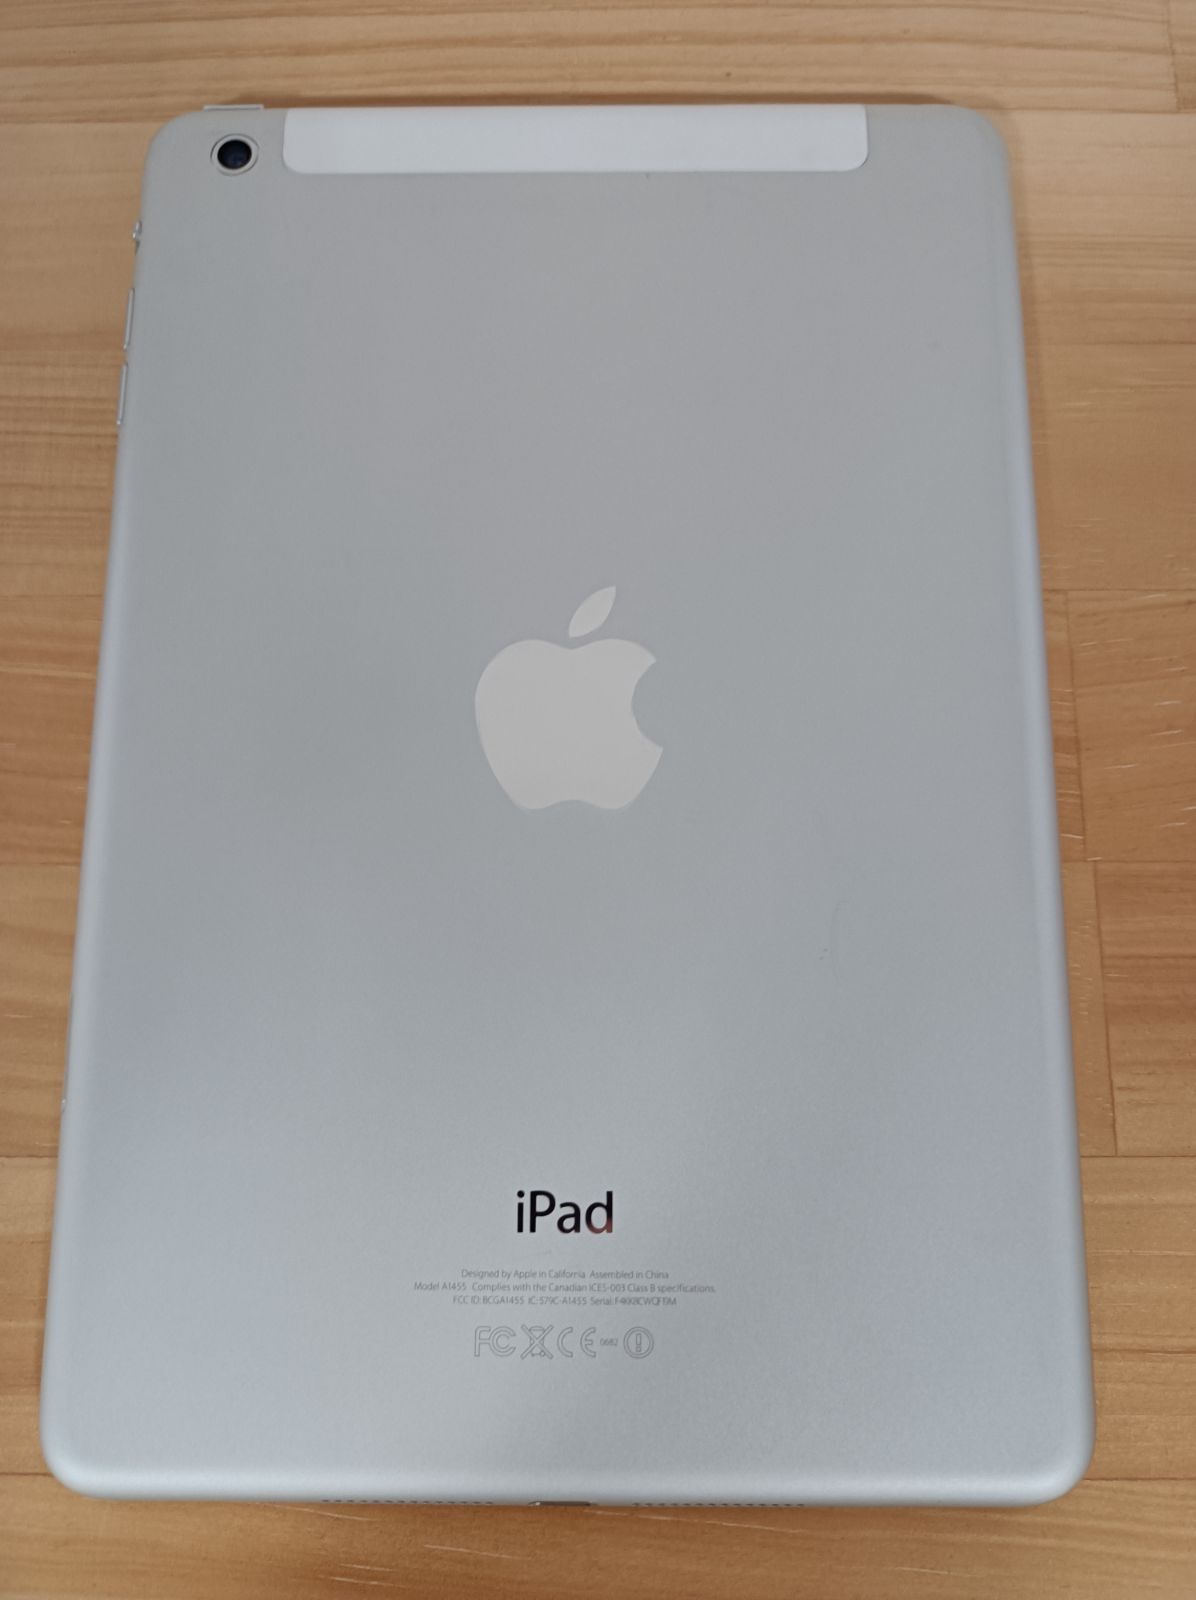 Apple iPad Mini a1455 16GB WiFi + 4G Verizon Unlocked | eBay